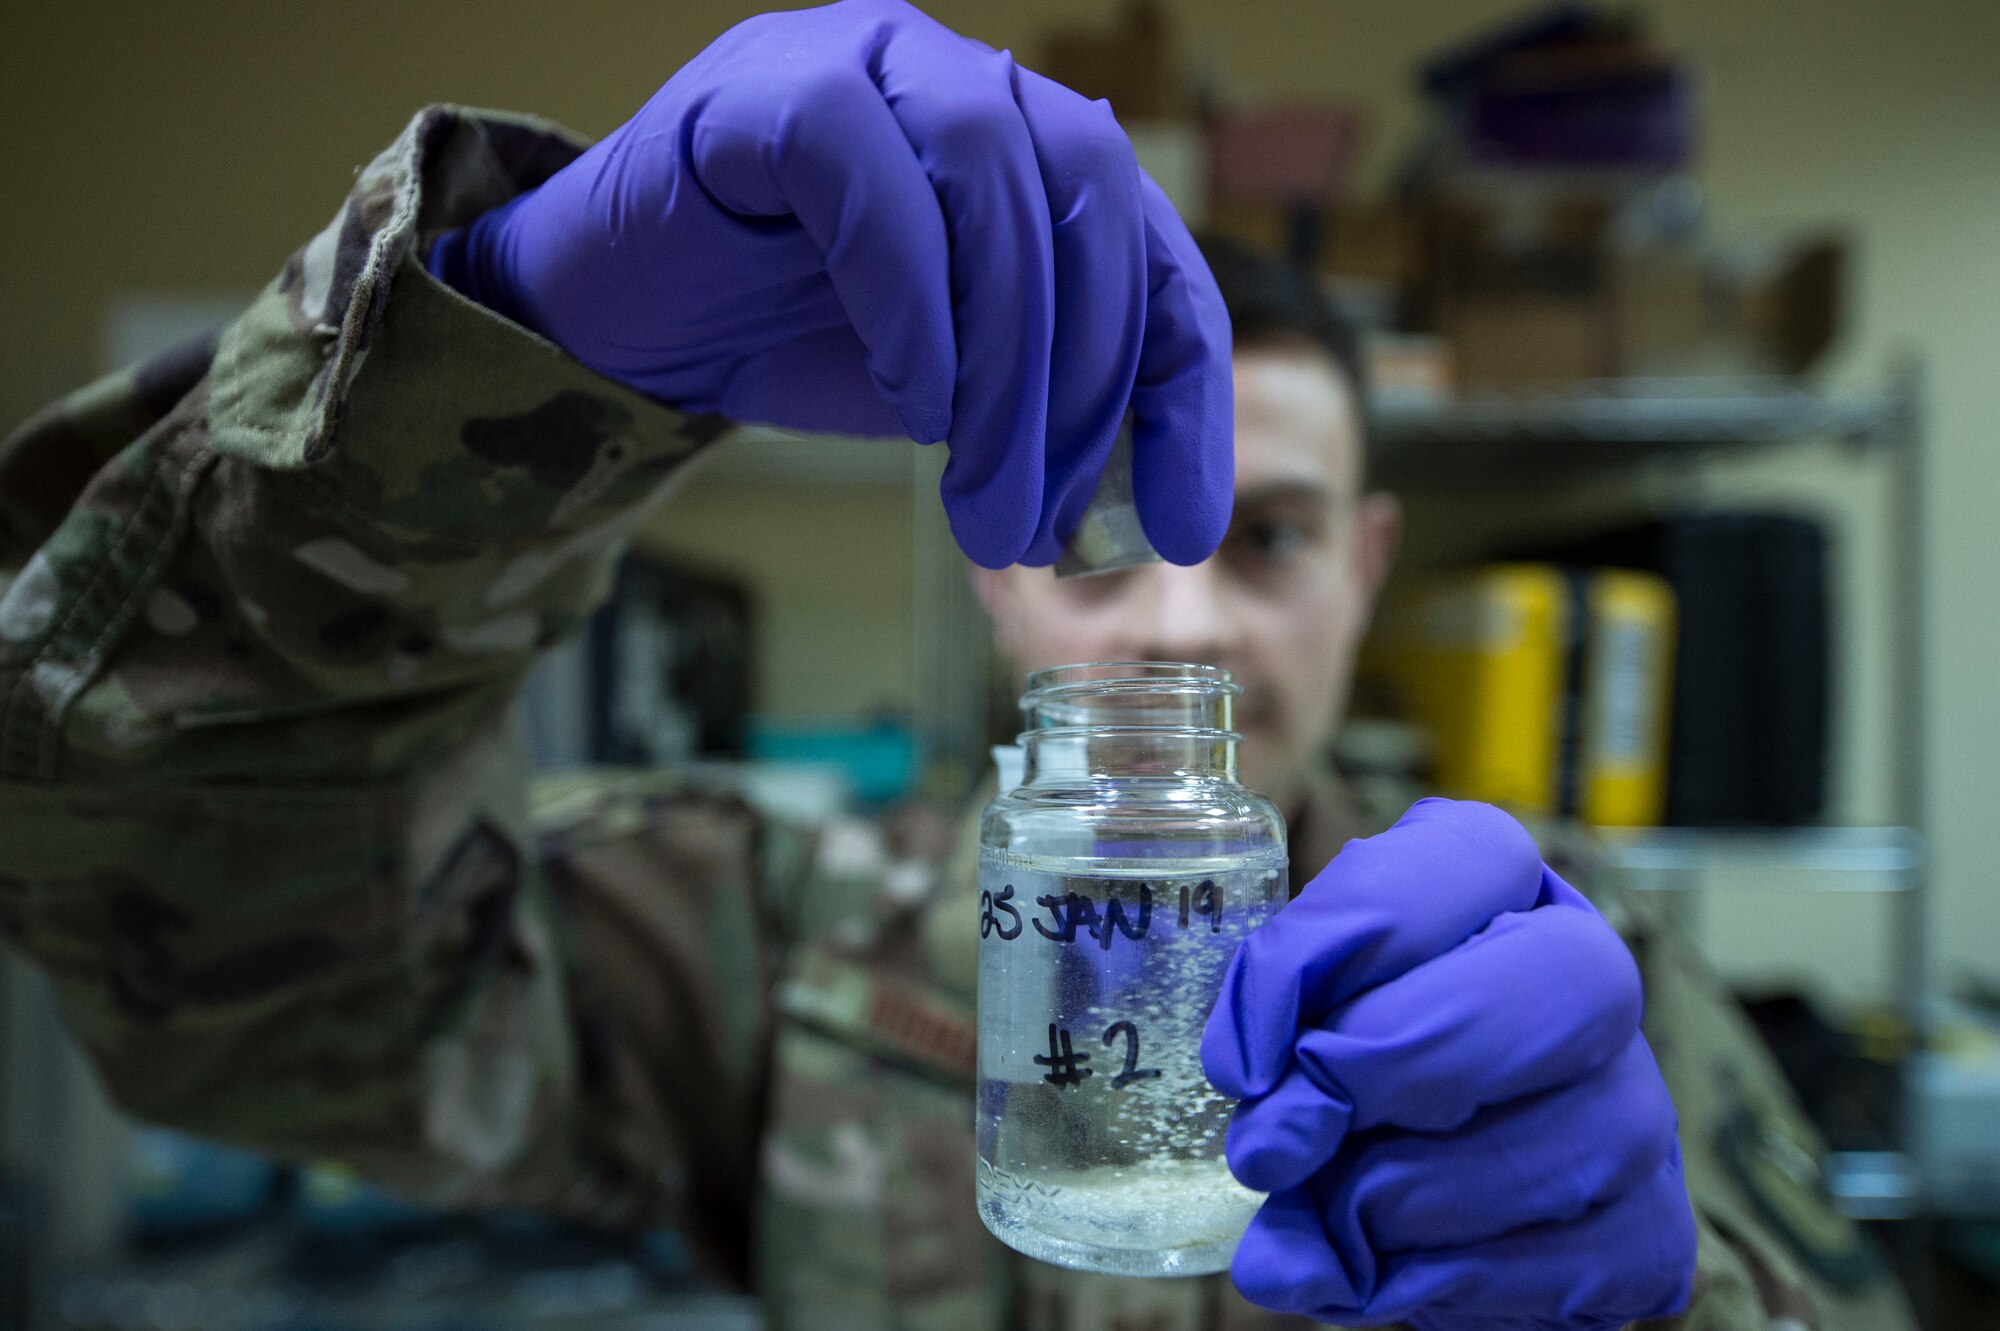 Expeditionary bioenvironmental technicians safeguard 386th AEW